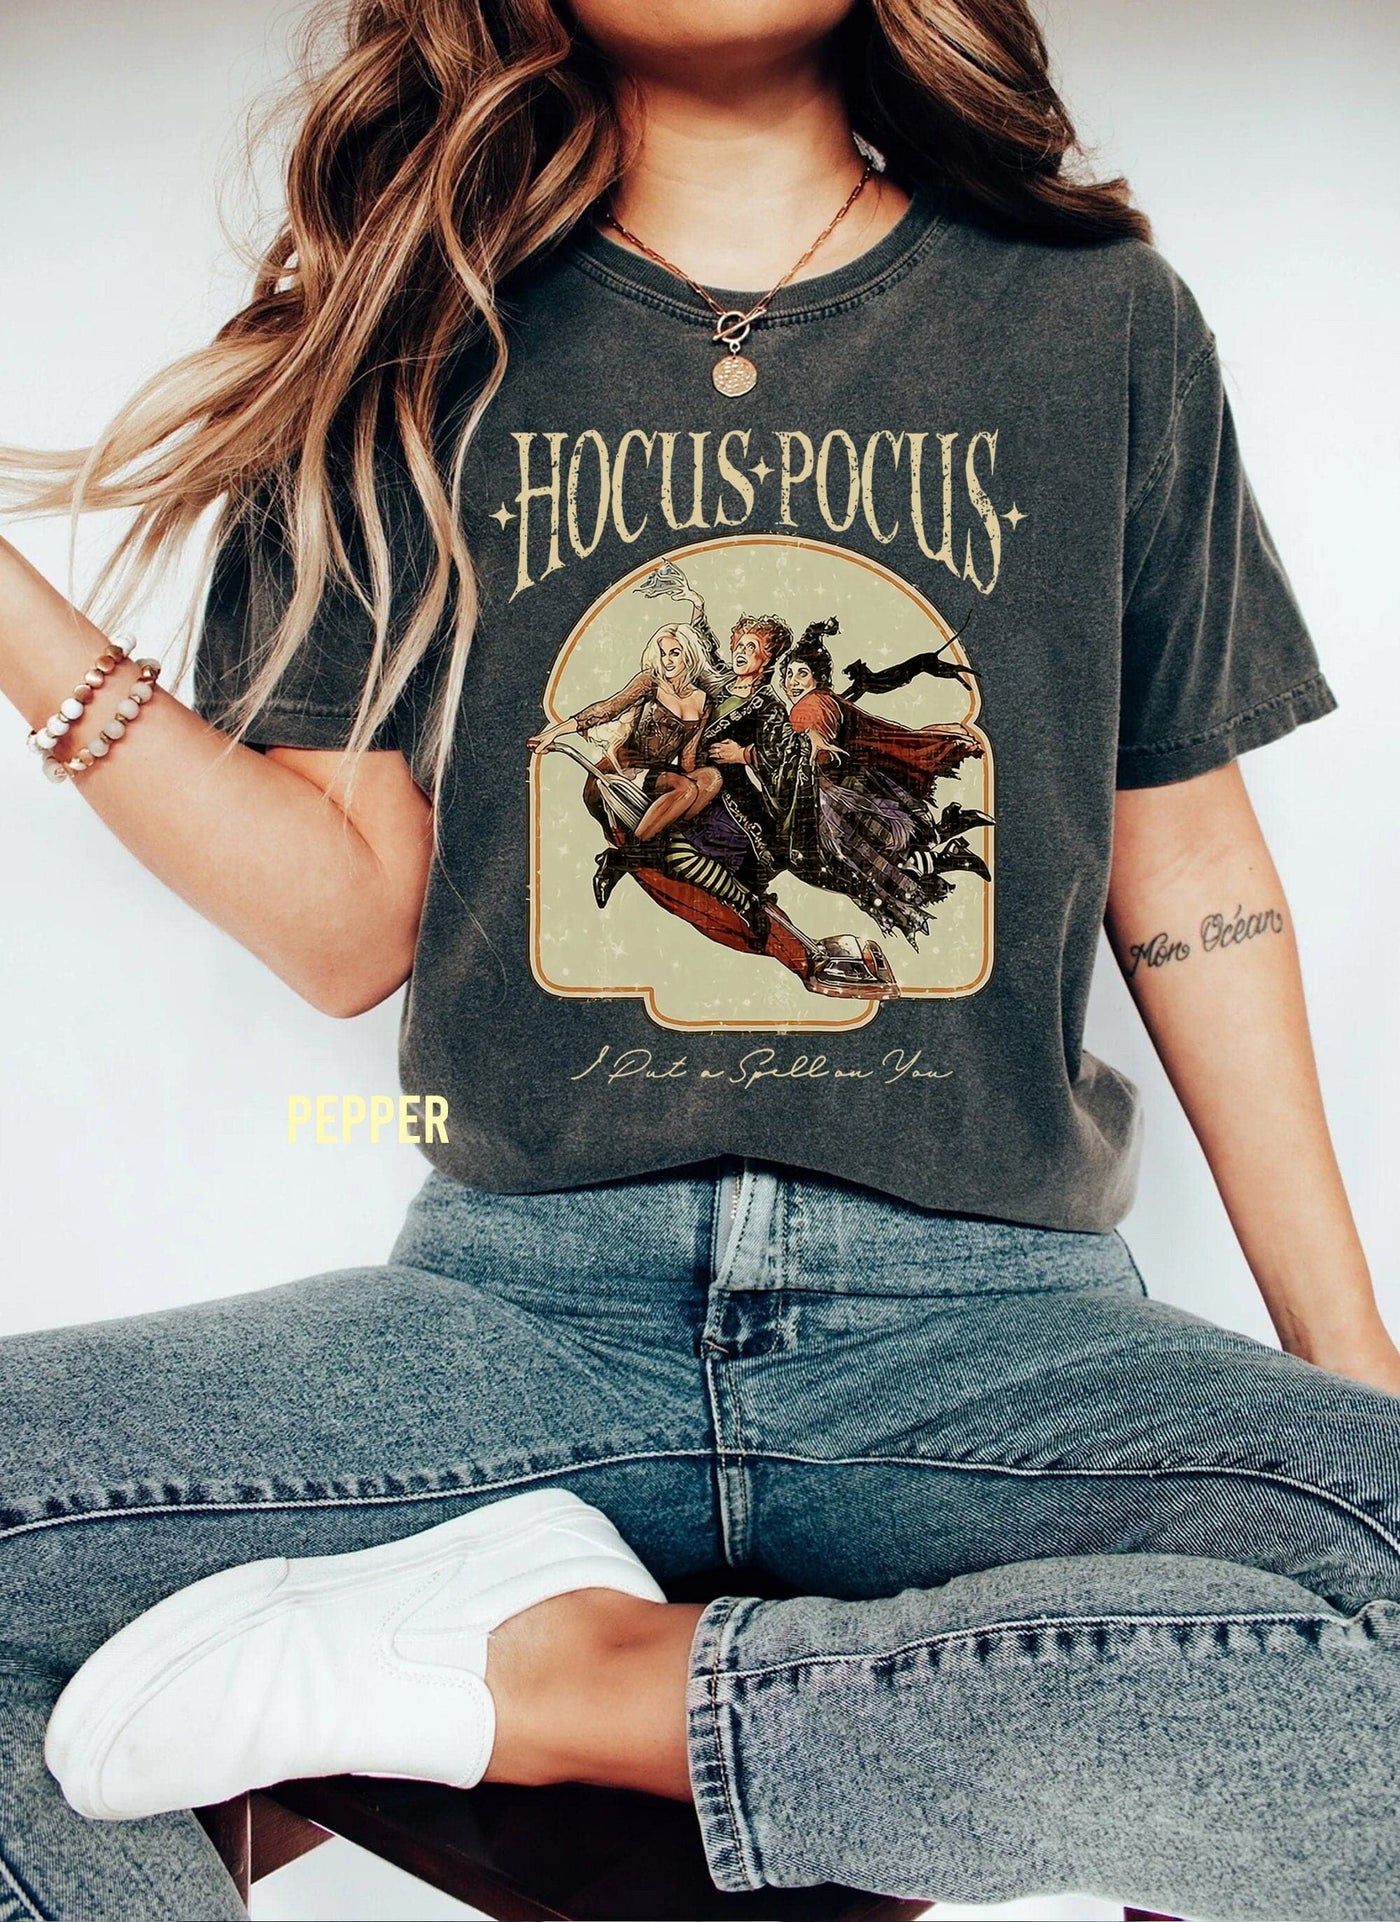 Hocus Pocus Comfort Colors T-Shirt, Vintage Halloween Shirt, Horror Movie Shirt, Hallowen Gifts, Halloween Party, Sanderson Sisters Shirt